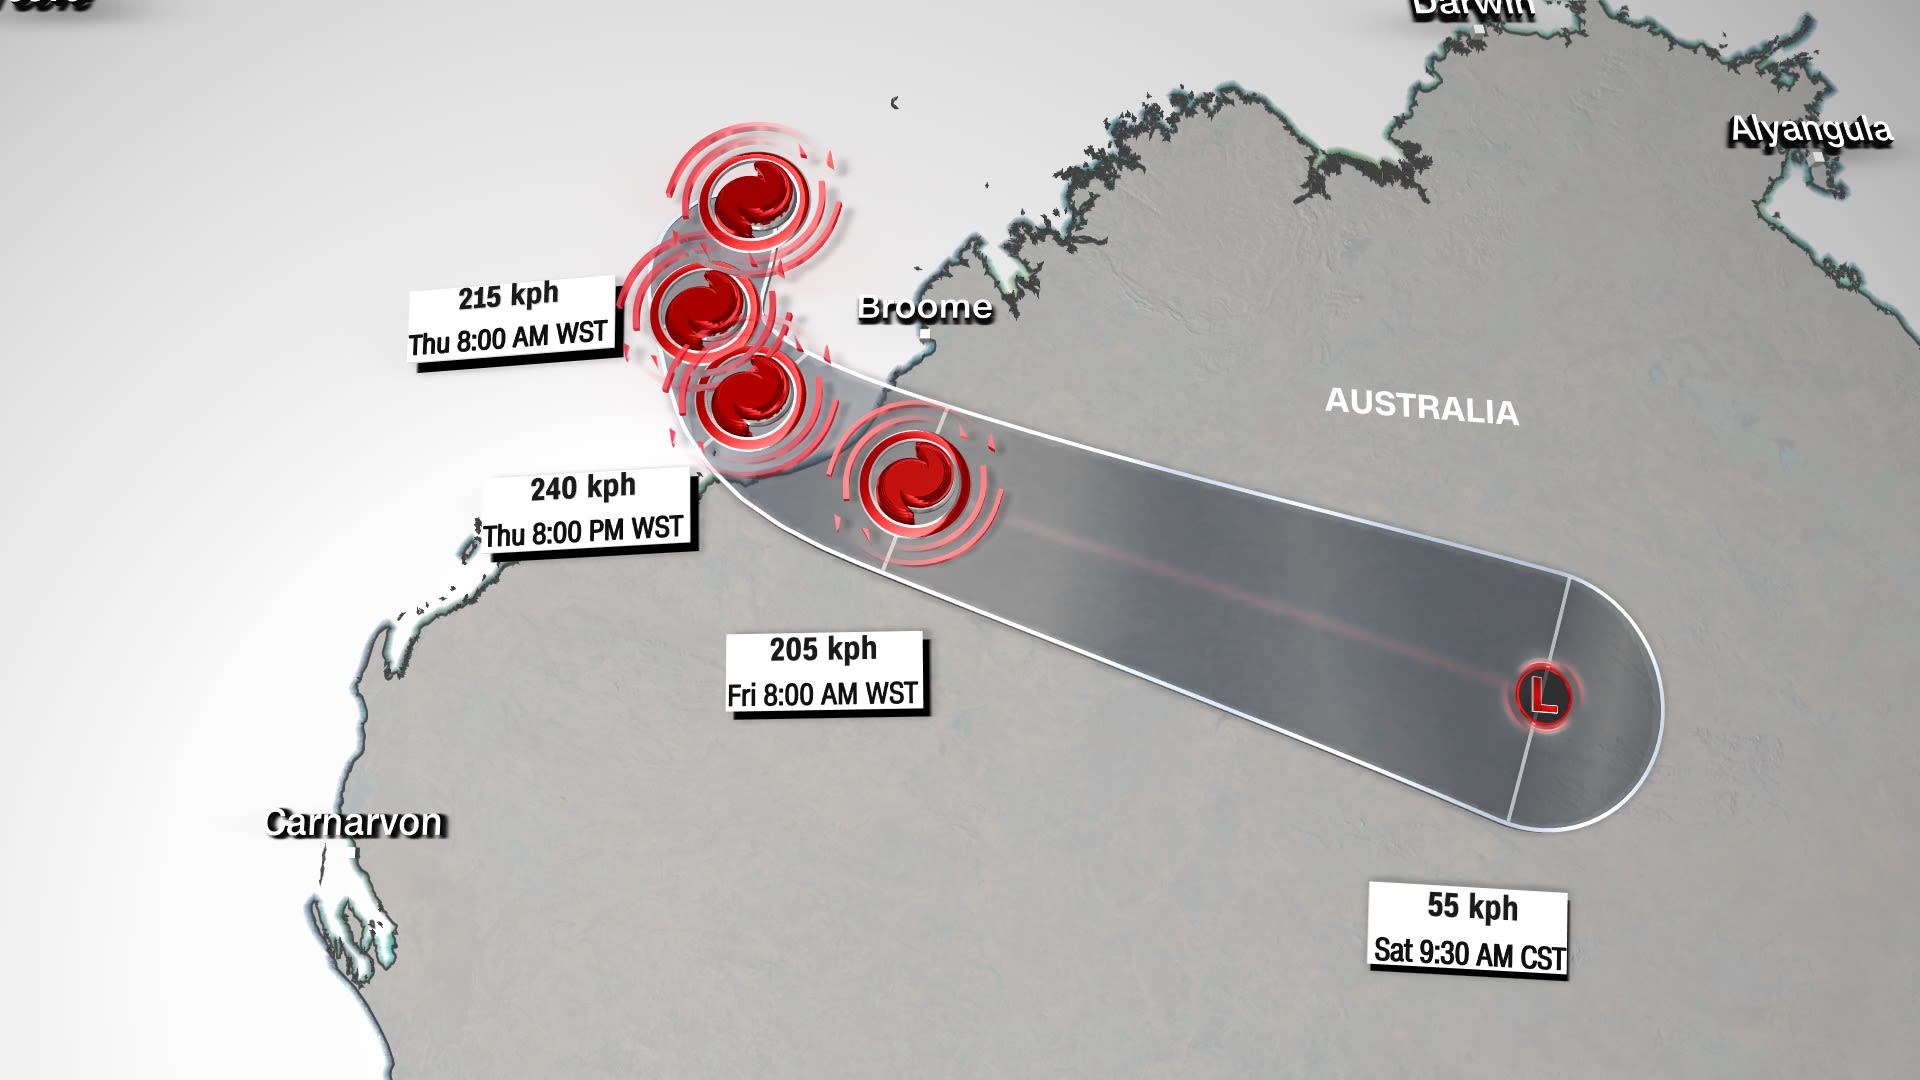 Windy.com - 🌀UPDATE: #CycloneIlsa has made landfall near Port Hedland, in  Western Australia. Cyclone is now slowly downgrading. #PortHedland #WX  #westernaustralia LIVE satellite imagery & Hurricane tracker 